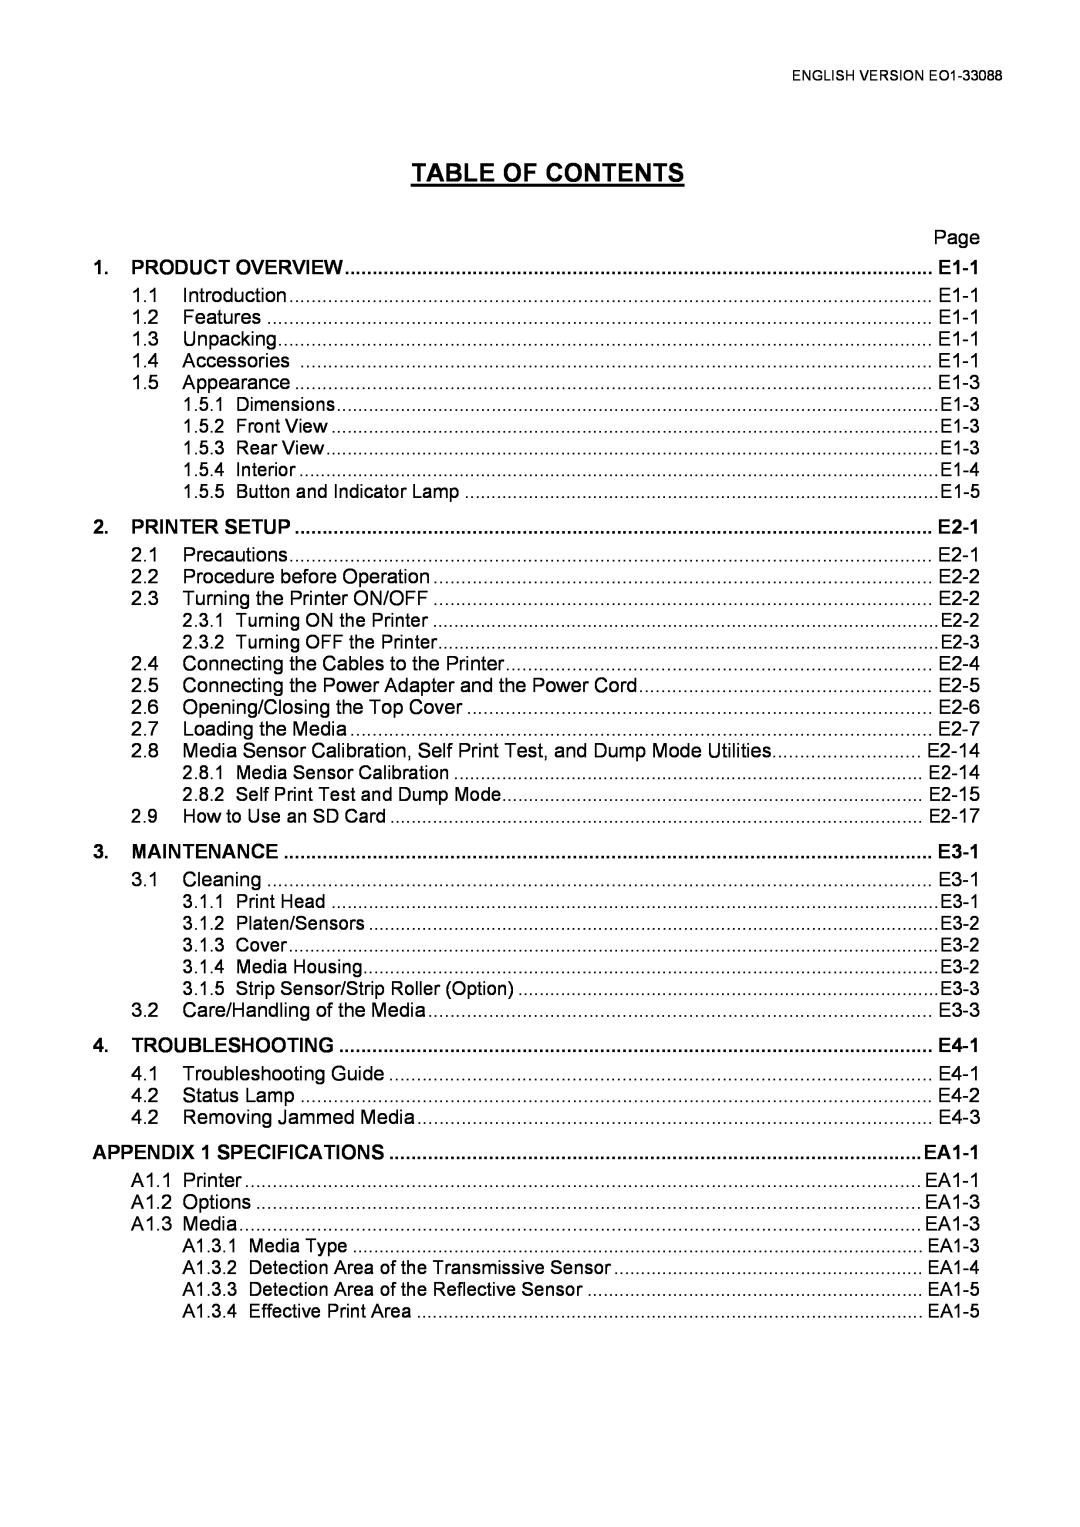 Toshiba B-EV4D SERIES Table Of Contents, Product Overview, E1-1, E2-1, Maintenance, E3-1, E4-1, APPENDIX 1 SPECIFICATIONS 